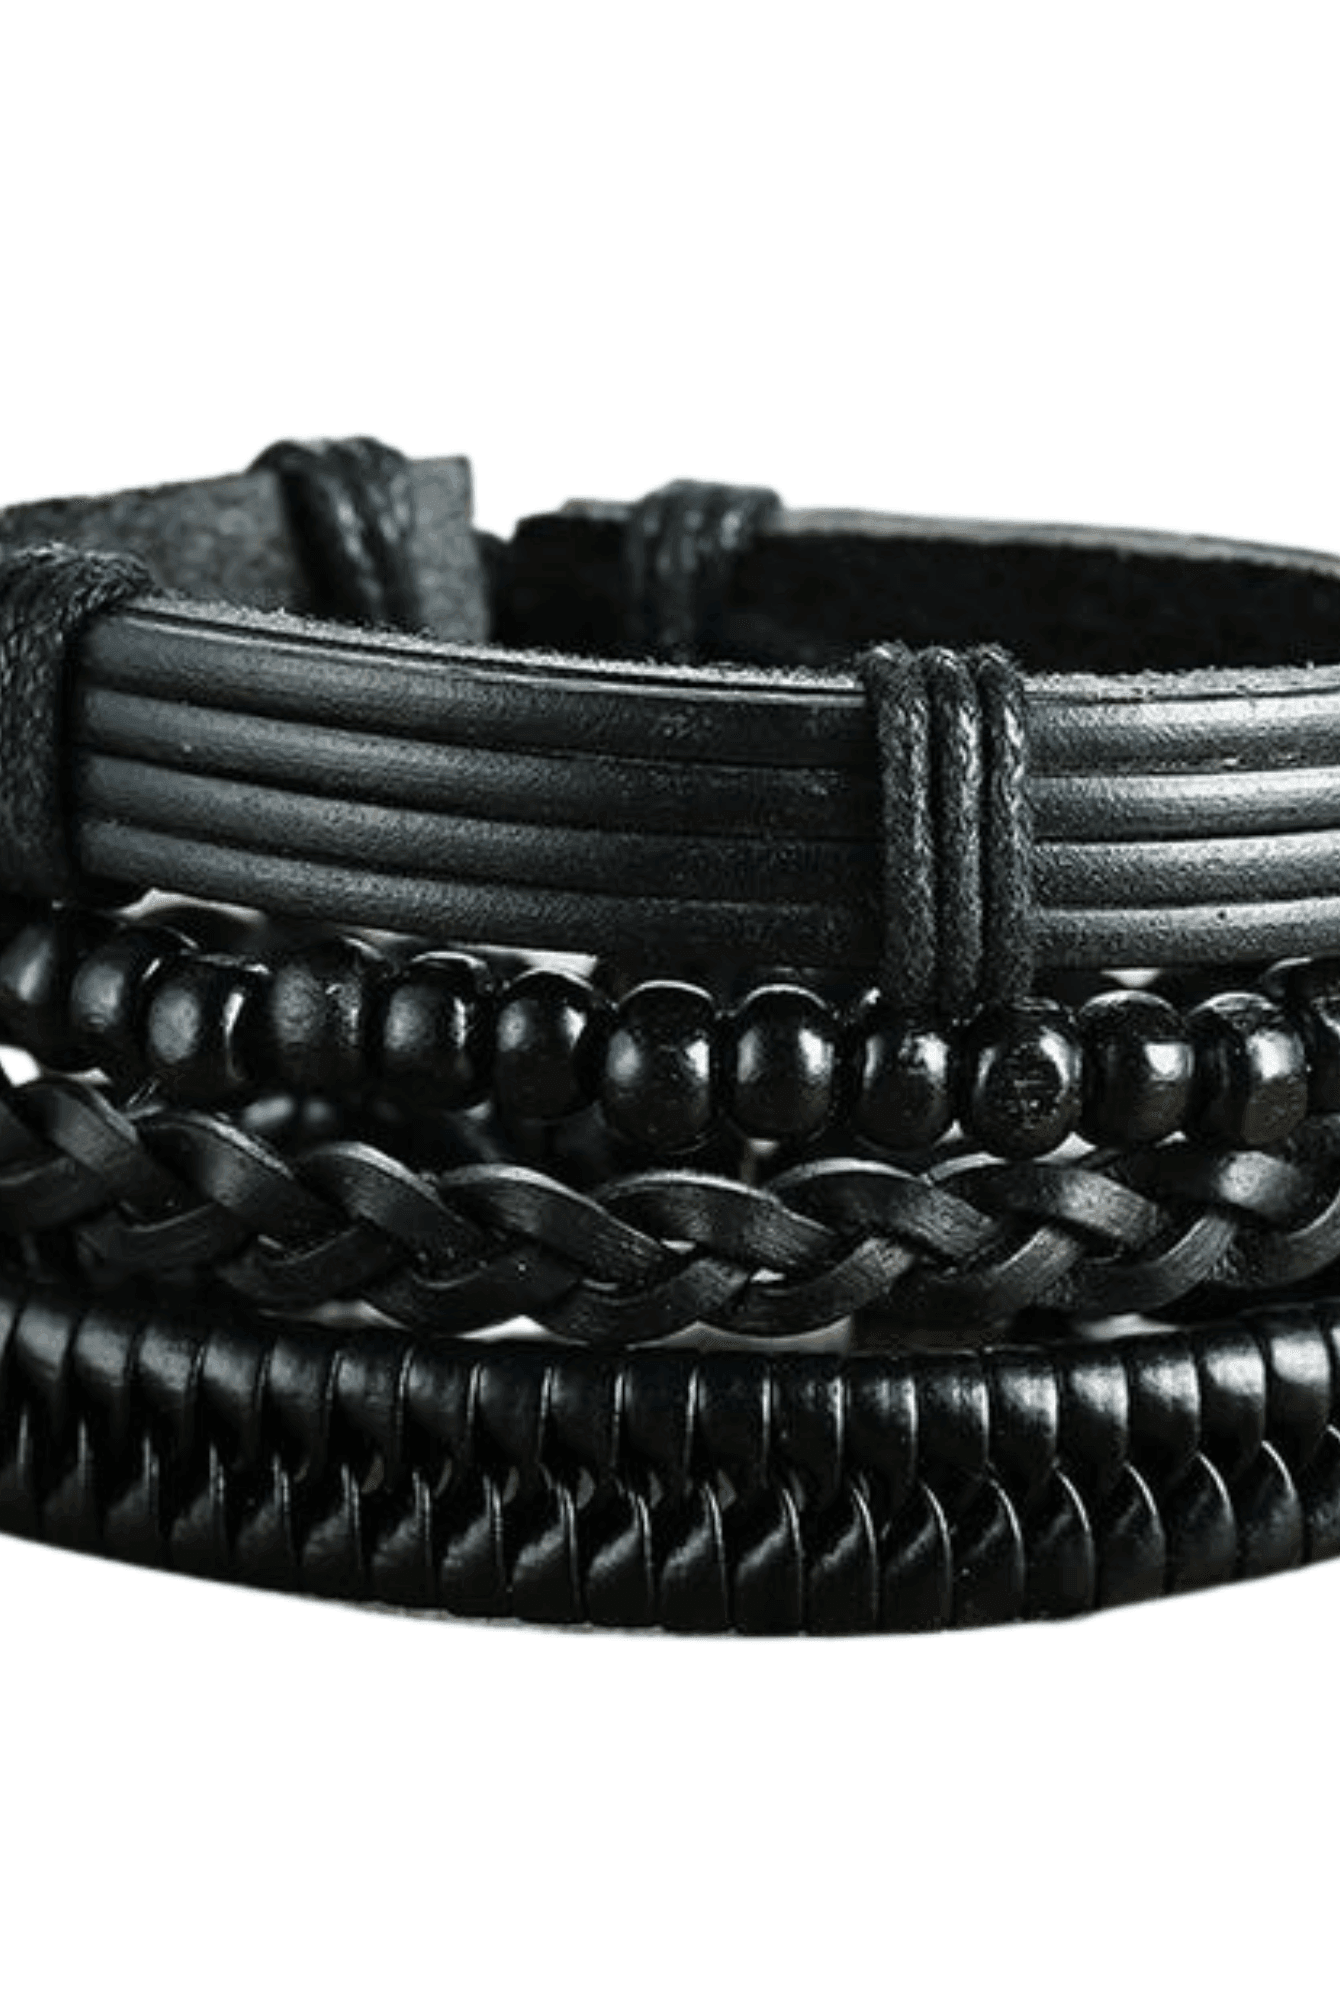 Men's Jewelry - Wristbands Mens Black Wristbands Set Of 4 Adjustable Multi-Layer Bracelets